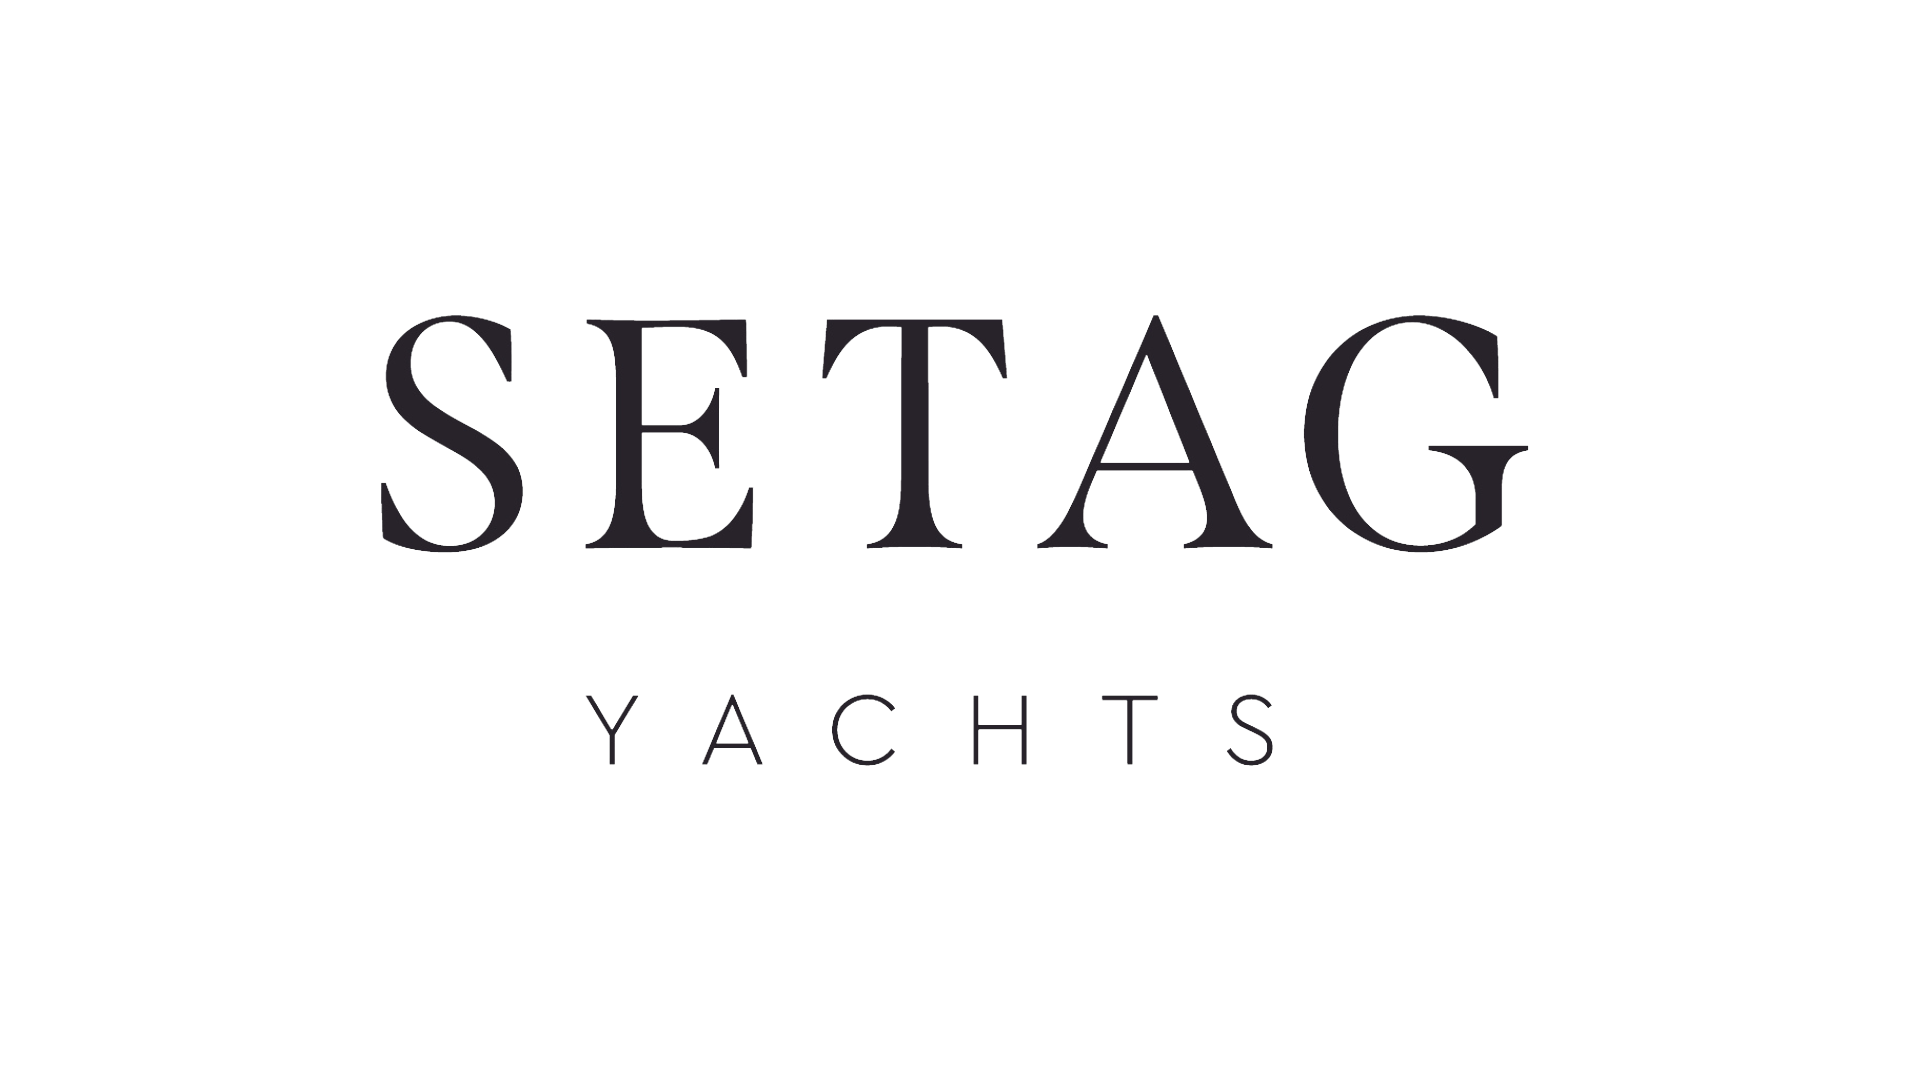 SETAG Yachts